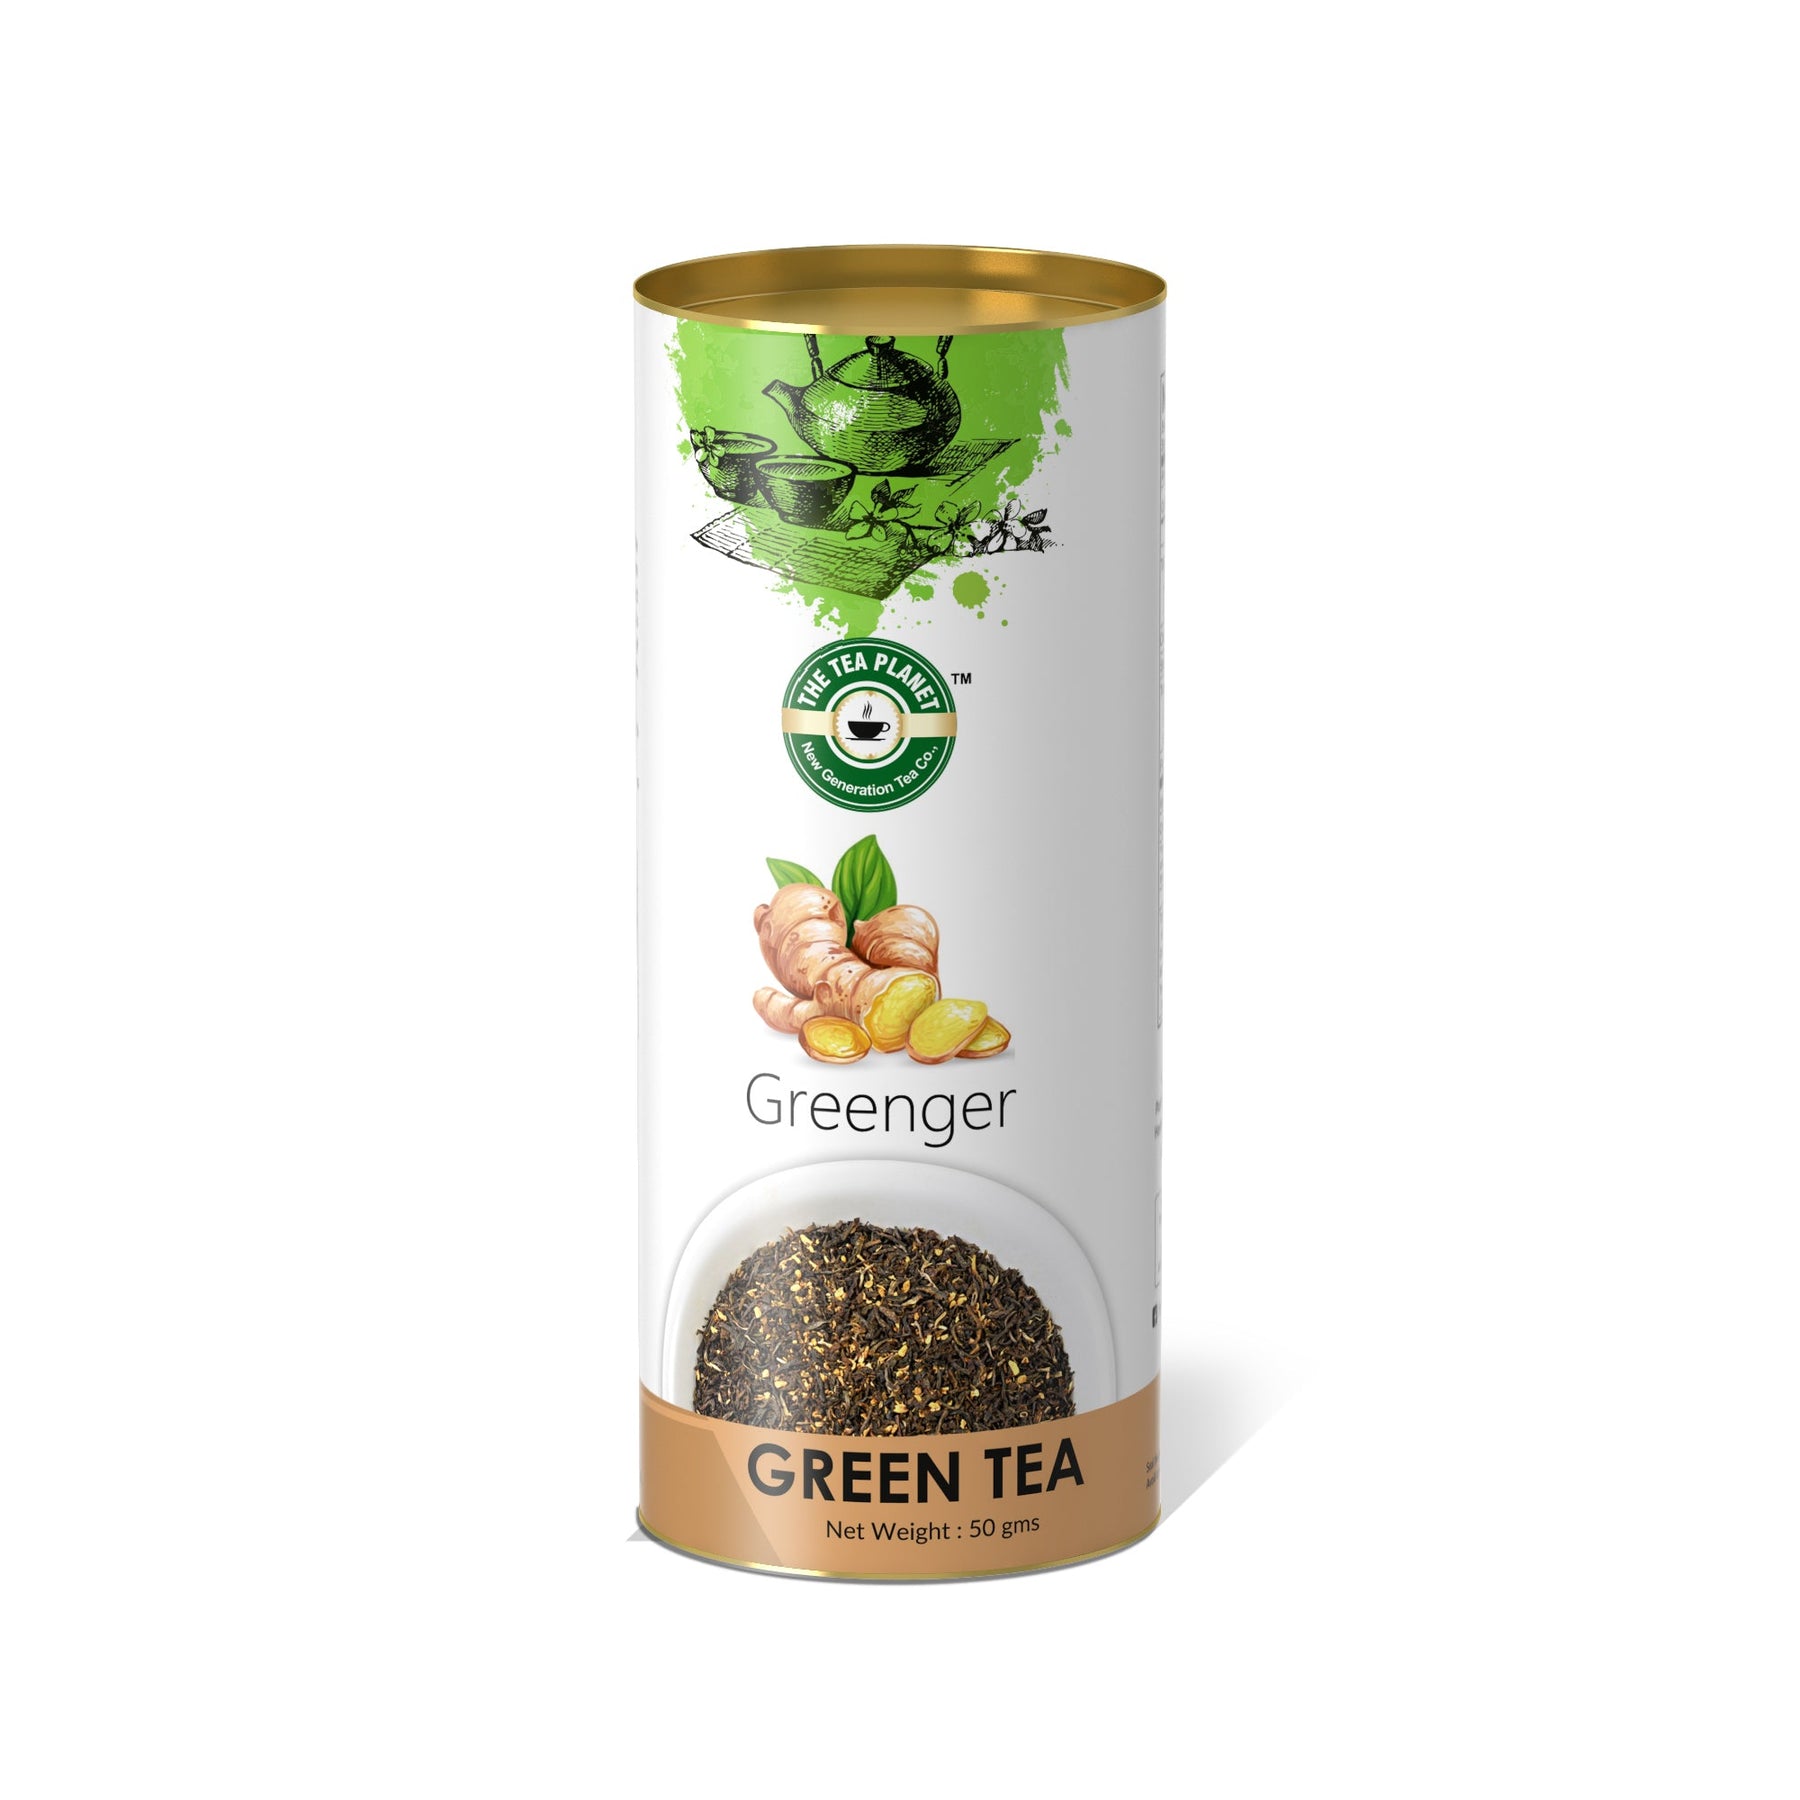 Greenger Orthodox Tea - 50 gms